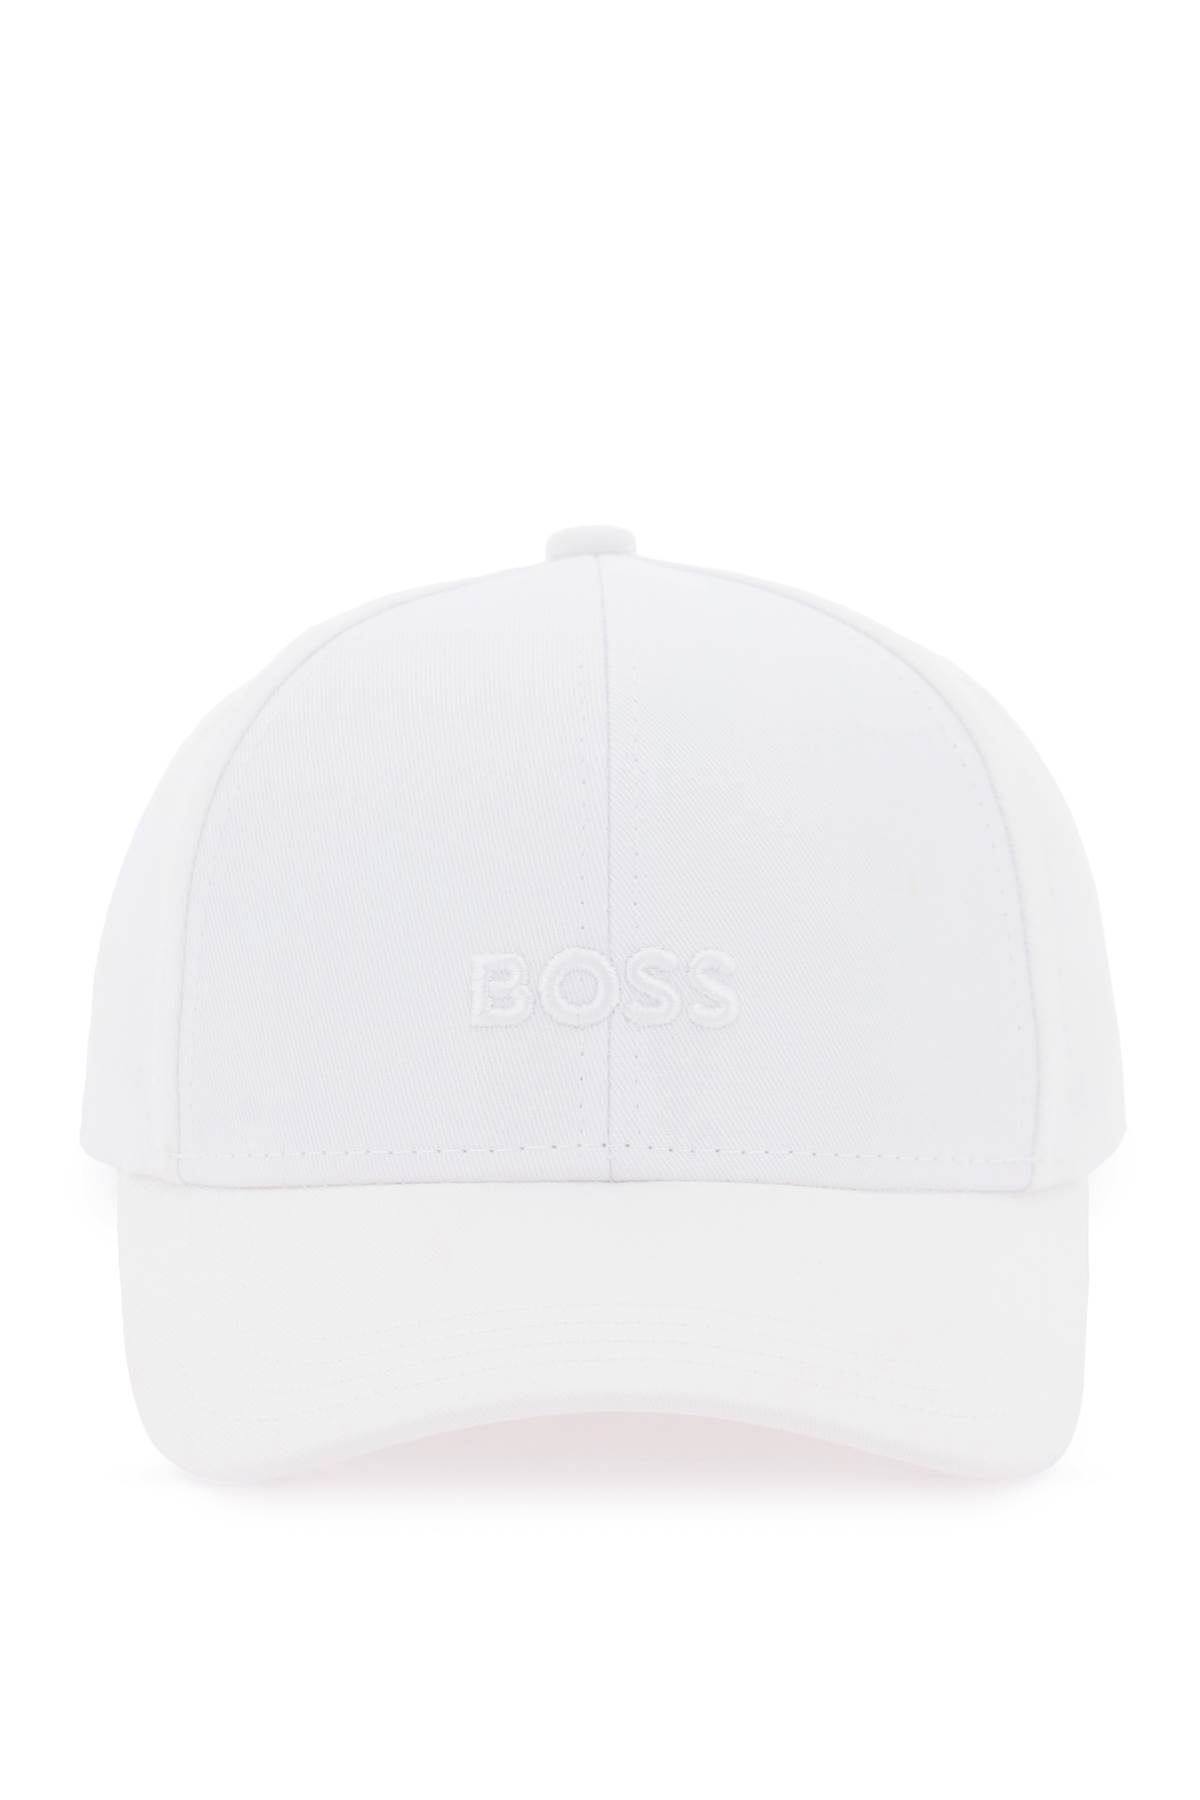 Hugo Boss Baseball Cap With ALWAYS | Embroidered Logo italist, A SALE LIKE